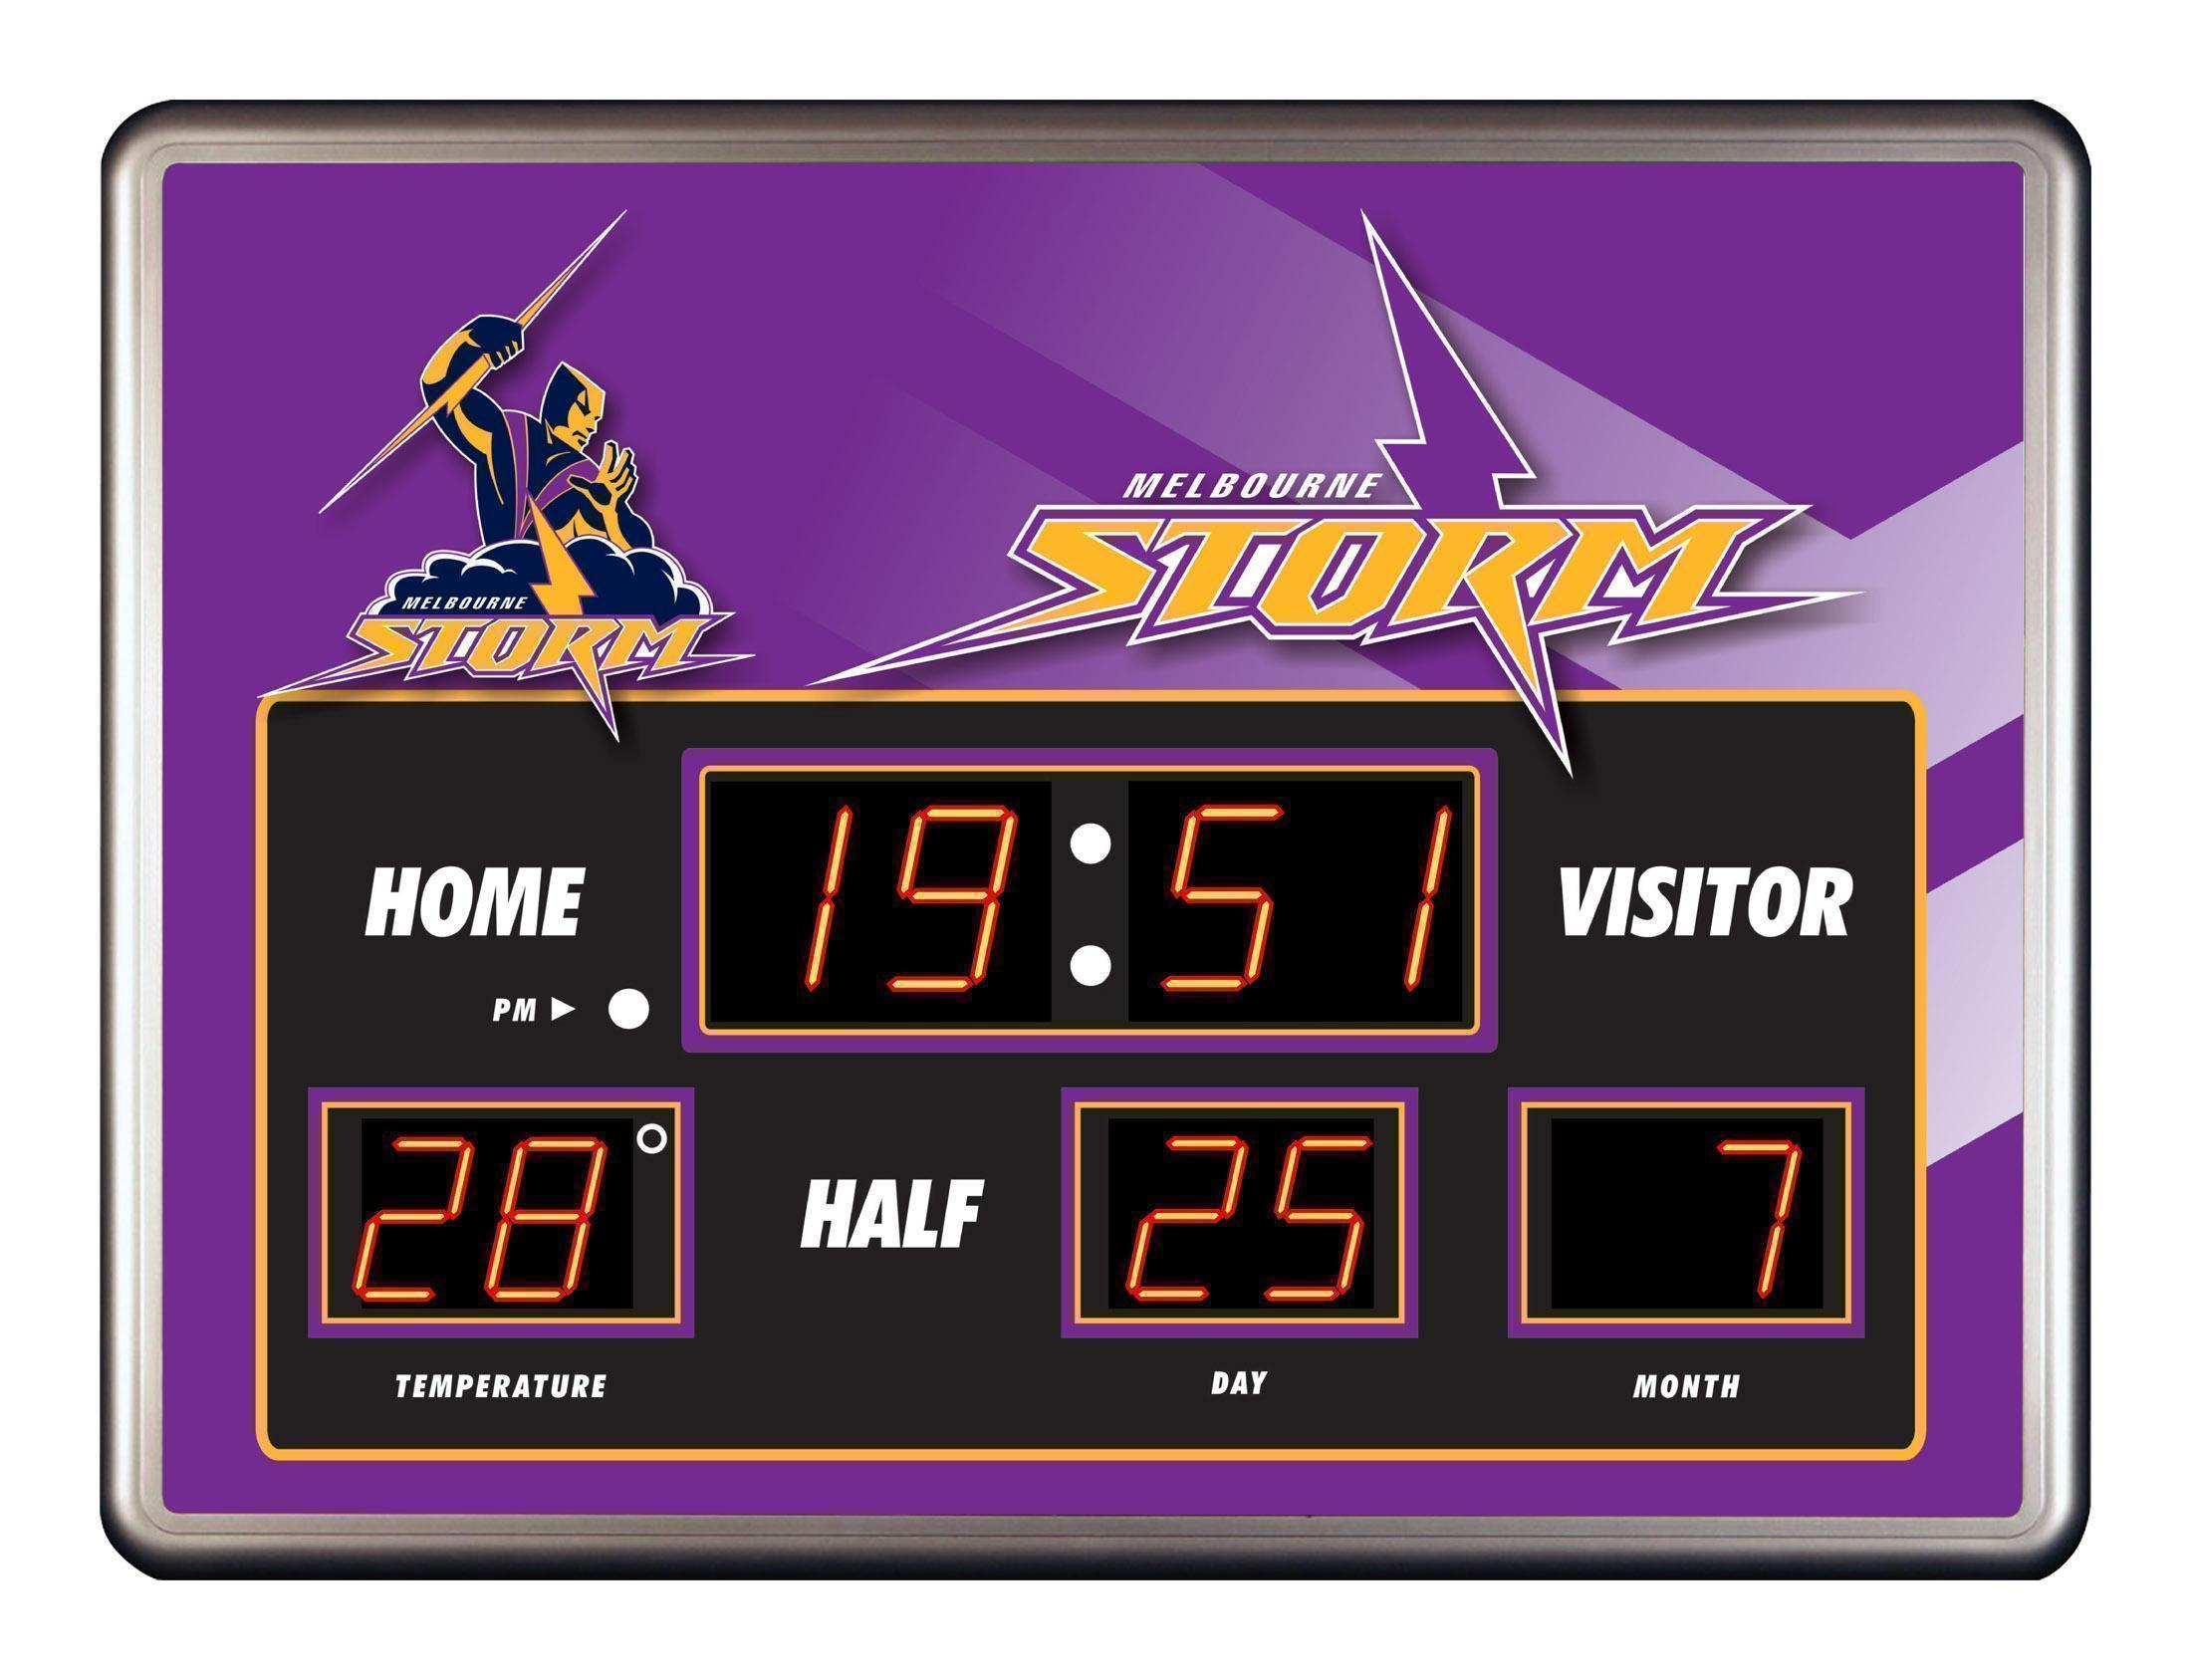 Melbourne Storm LED Digital Scoreboard Clock